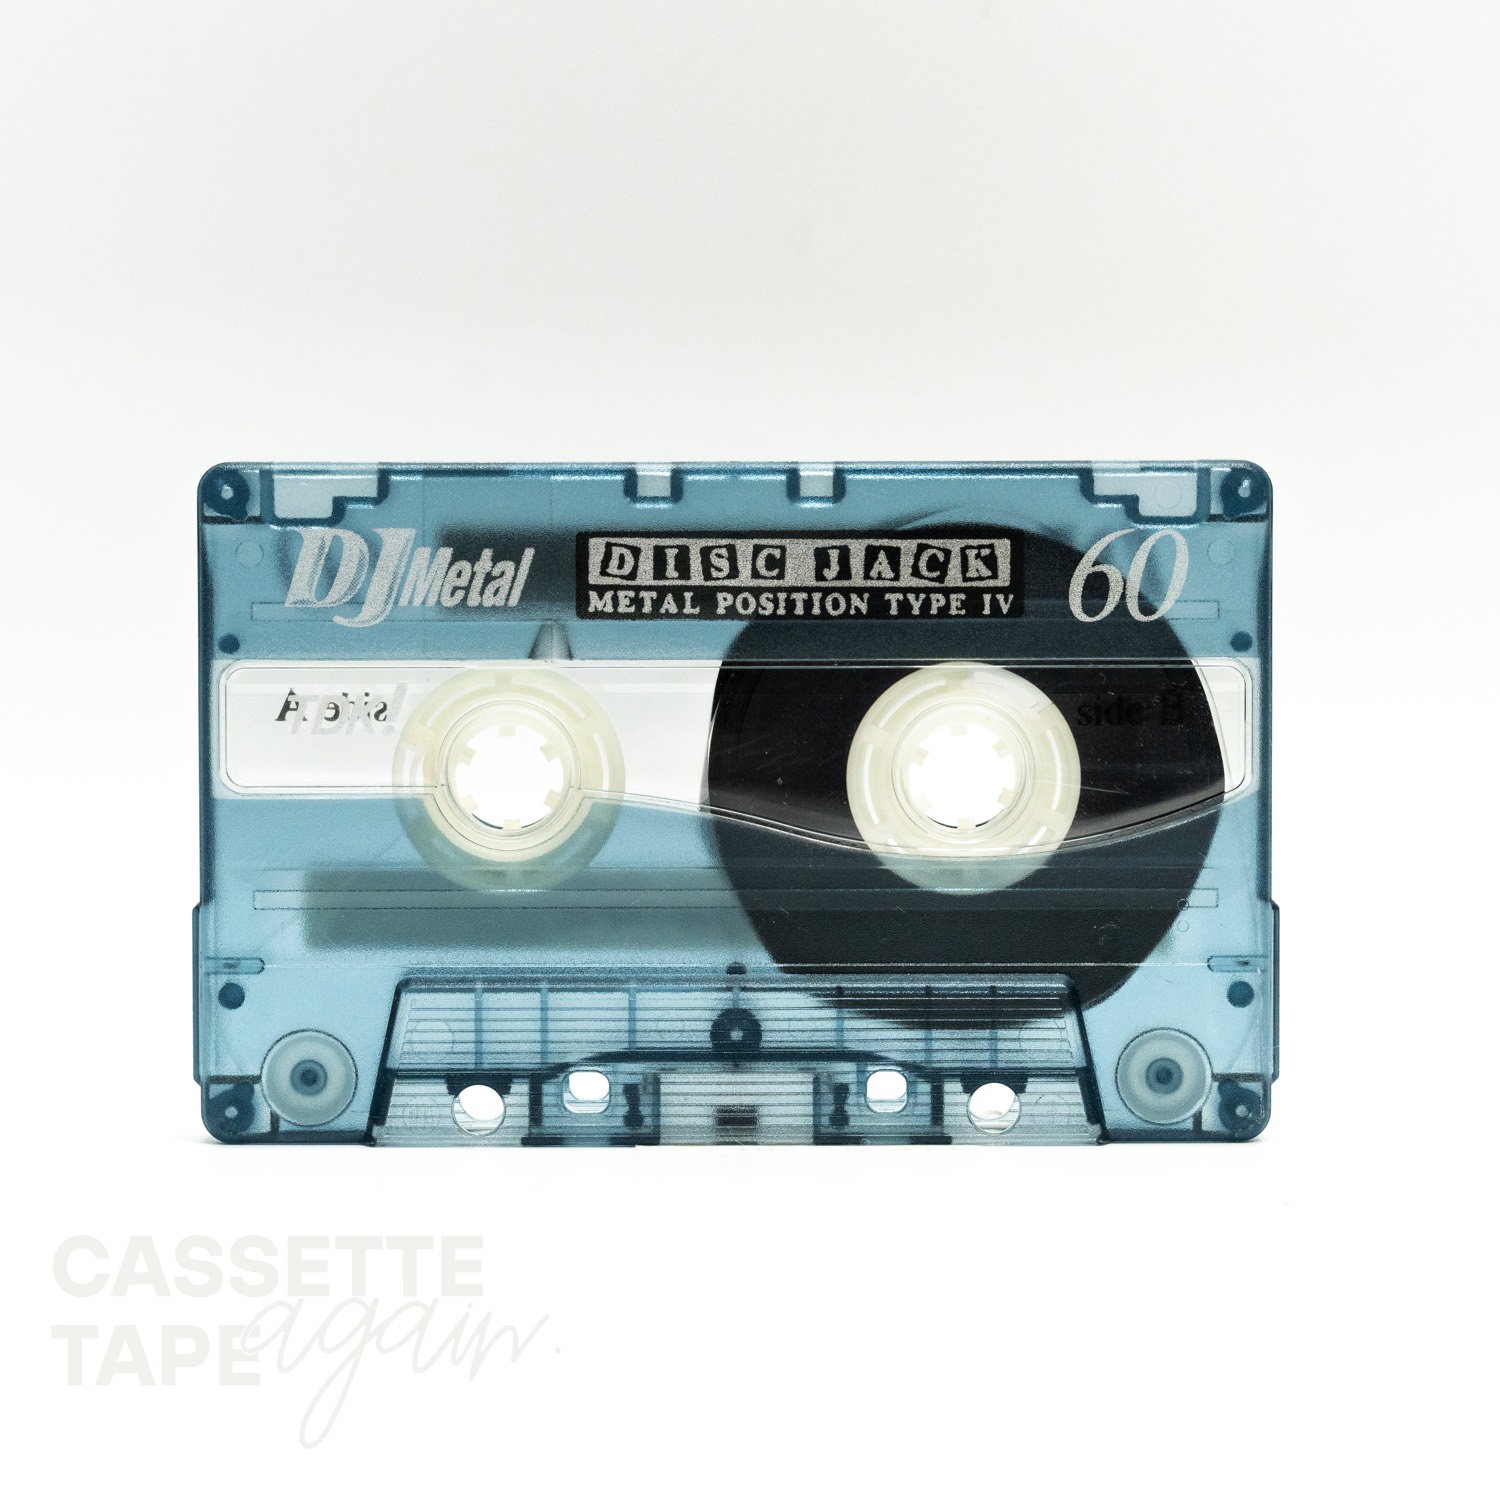 DJ Metal 60 / TDK(メタル) - CASSETTE TAPE again.